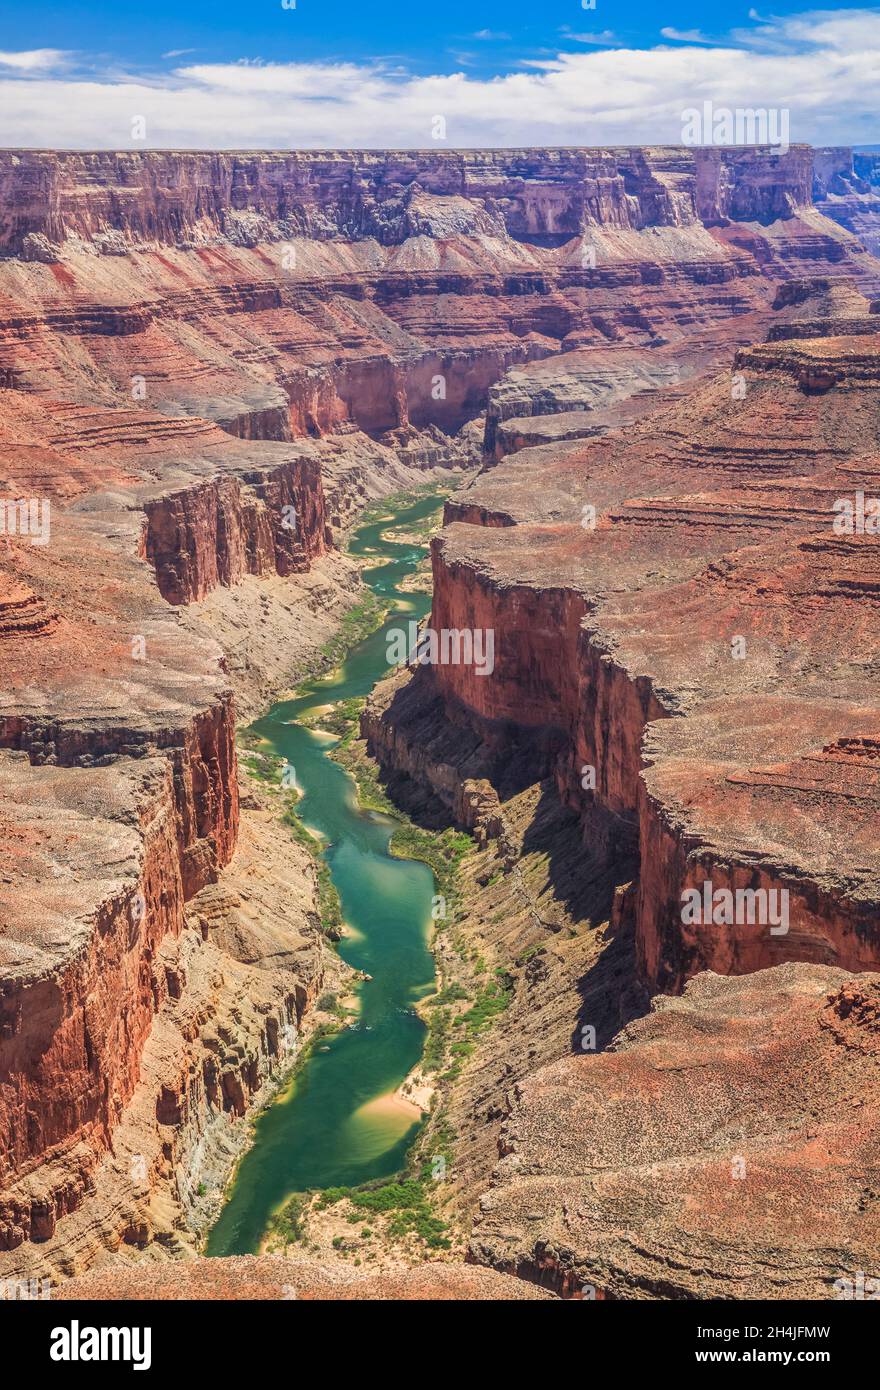 Marble Canyon des Colorado River im dreifachen nischen Bereich der Grand Canyon National Park, Arizona Stockfoto